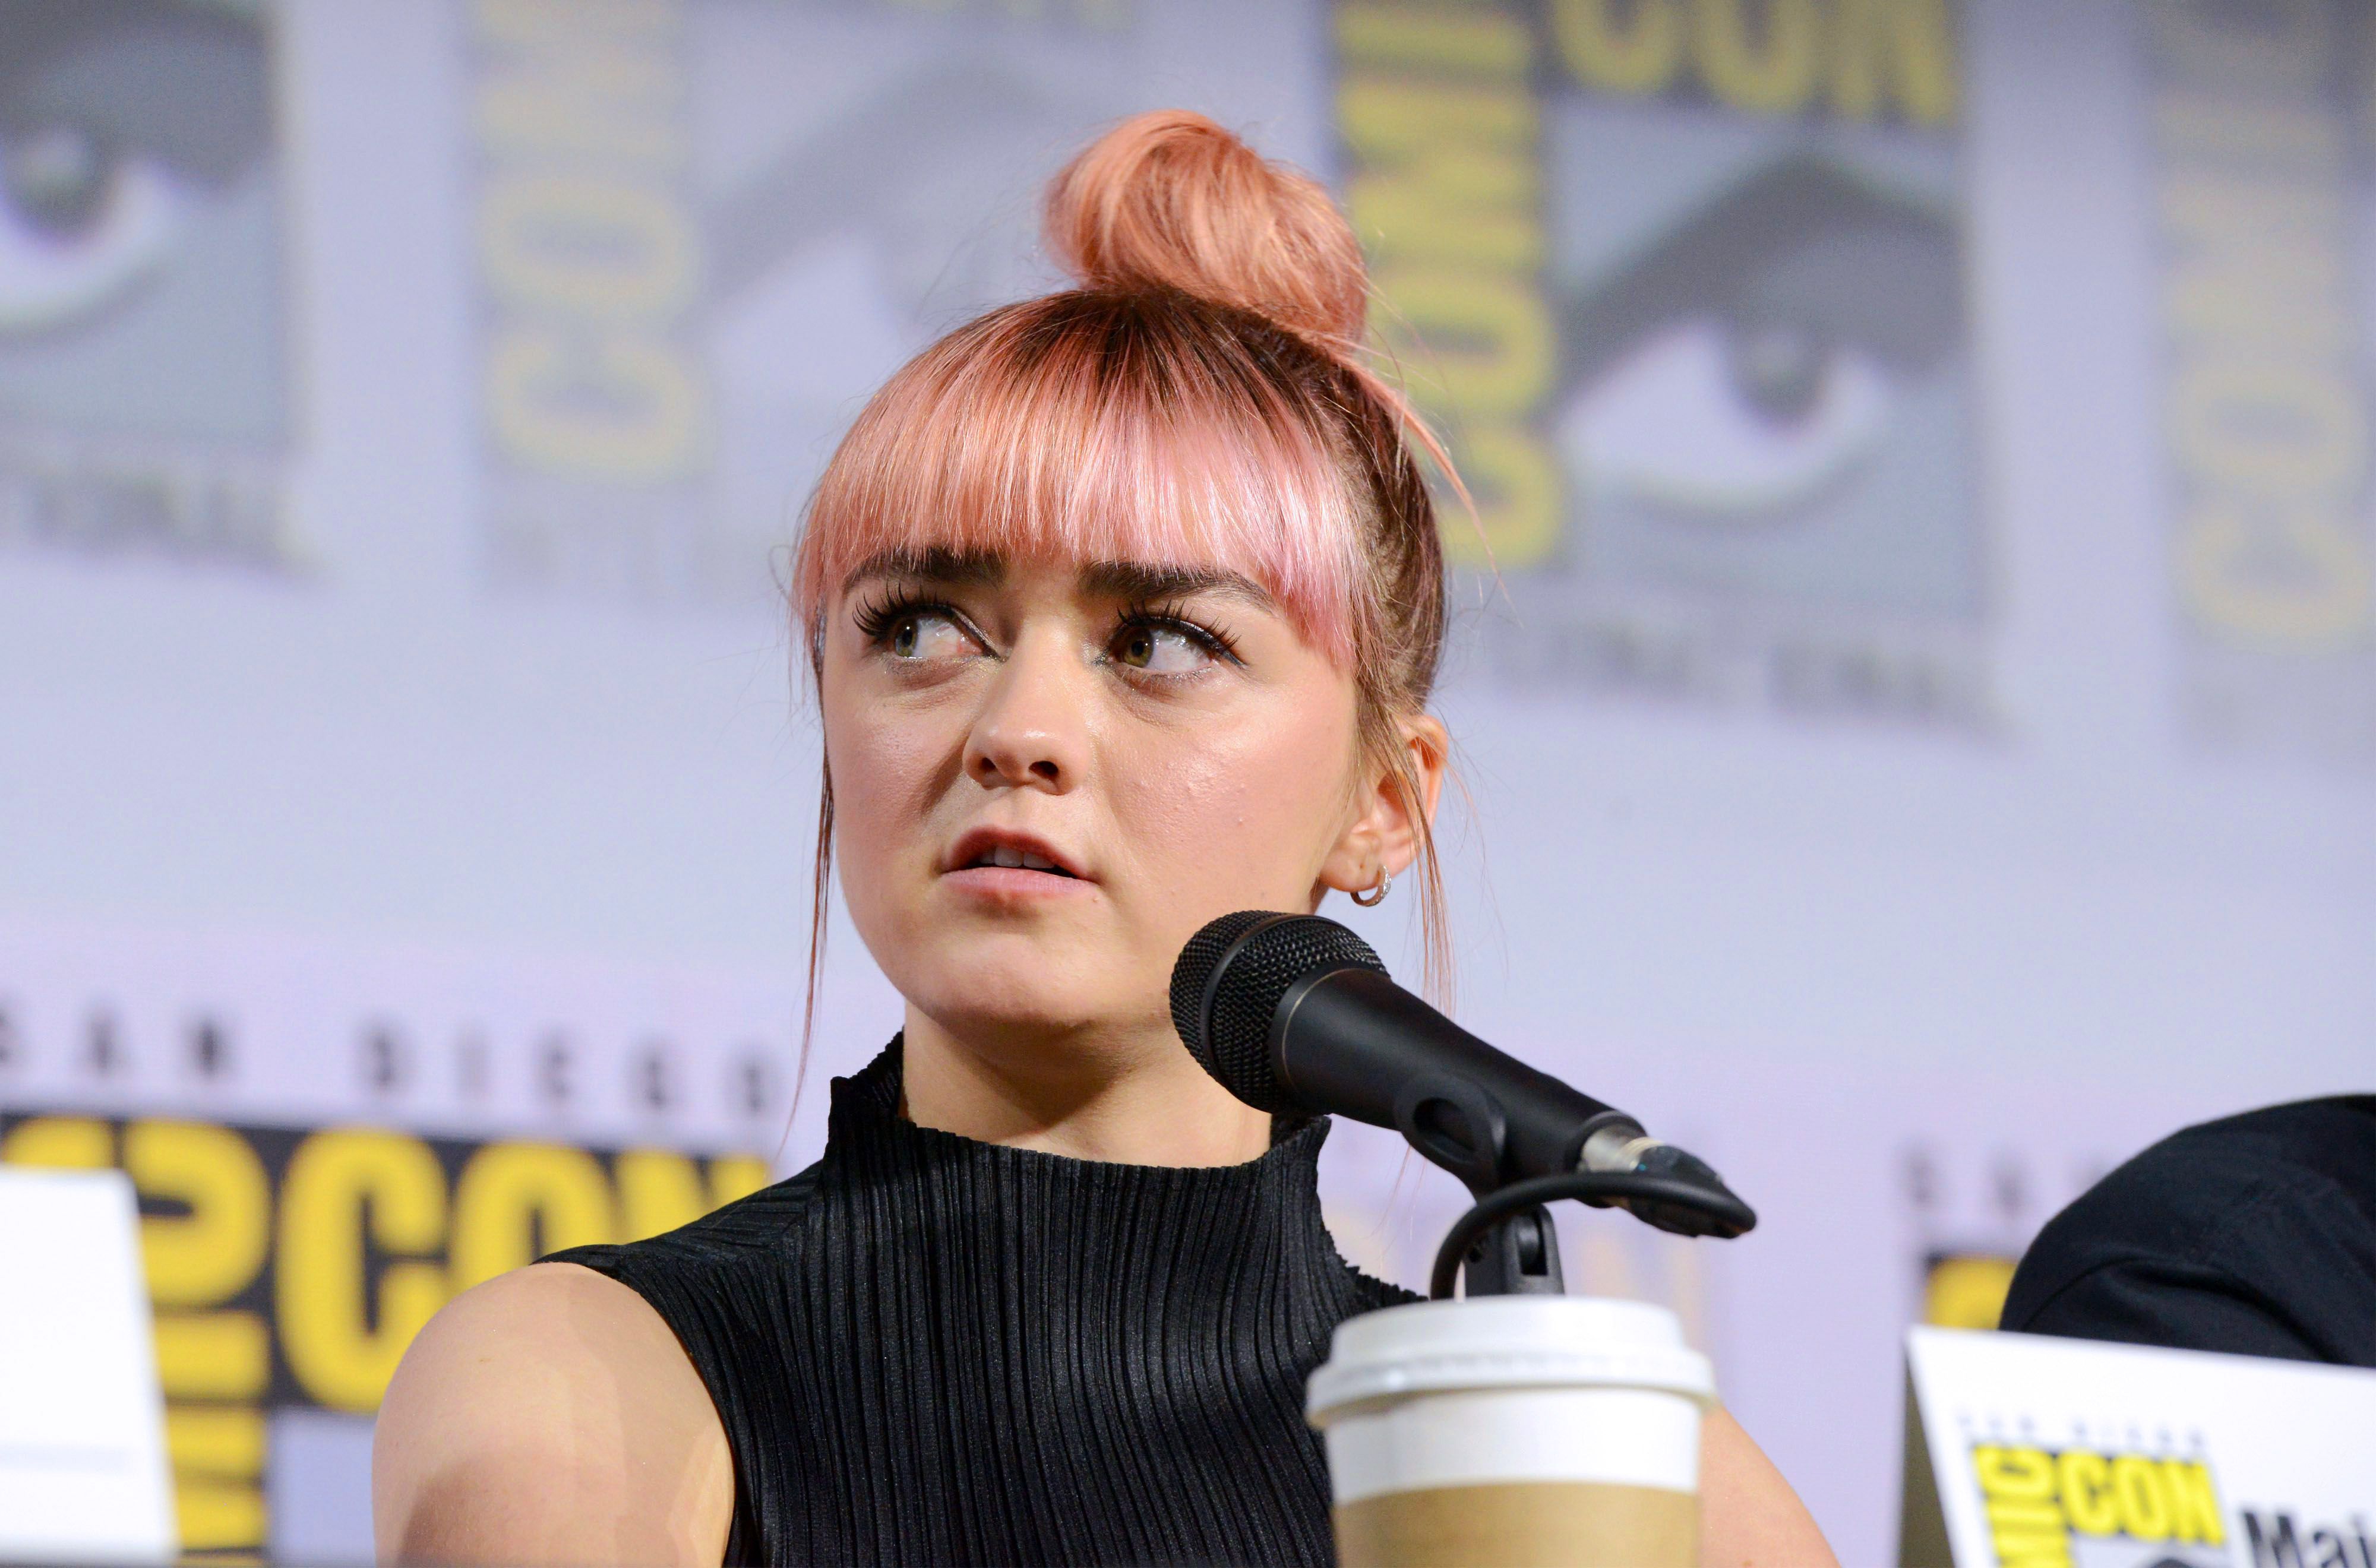 Arya Sex Comics - Game of Thrones' Cast Booed at Comic-Con 2019